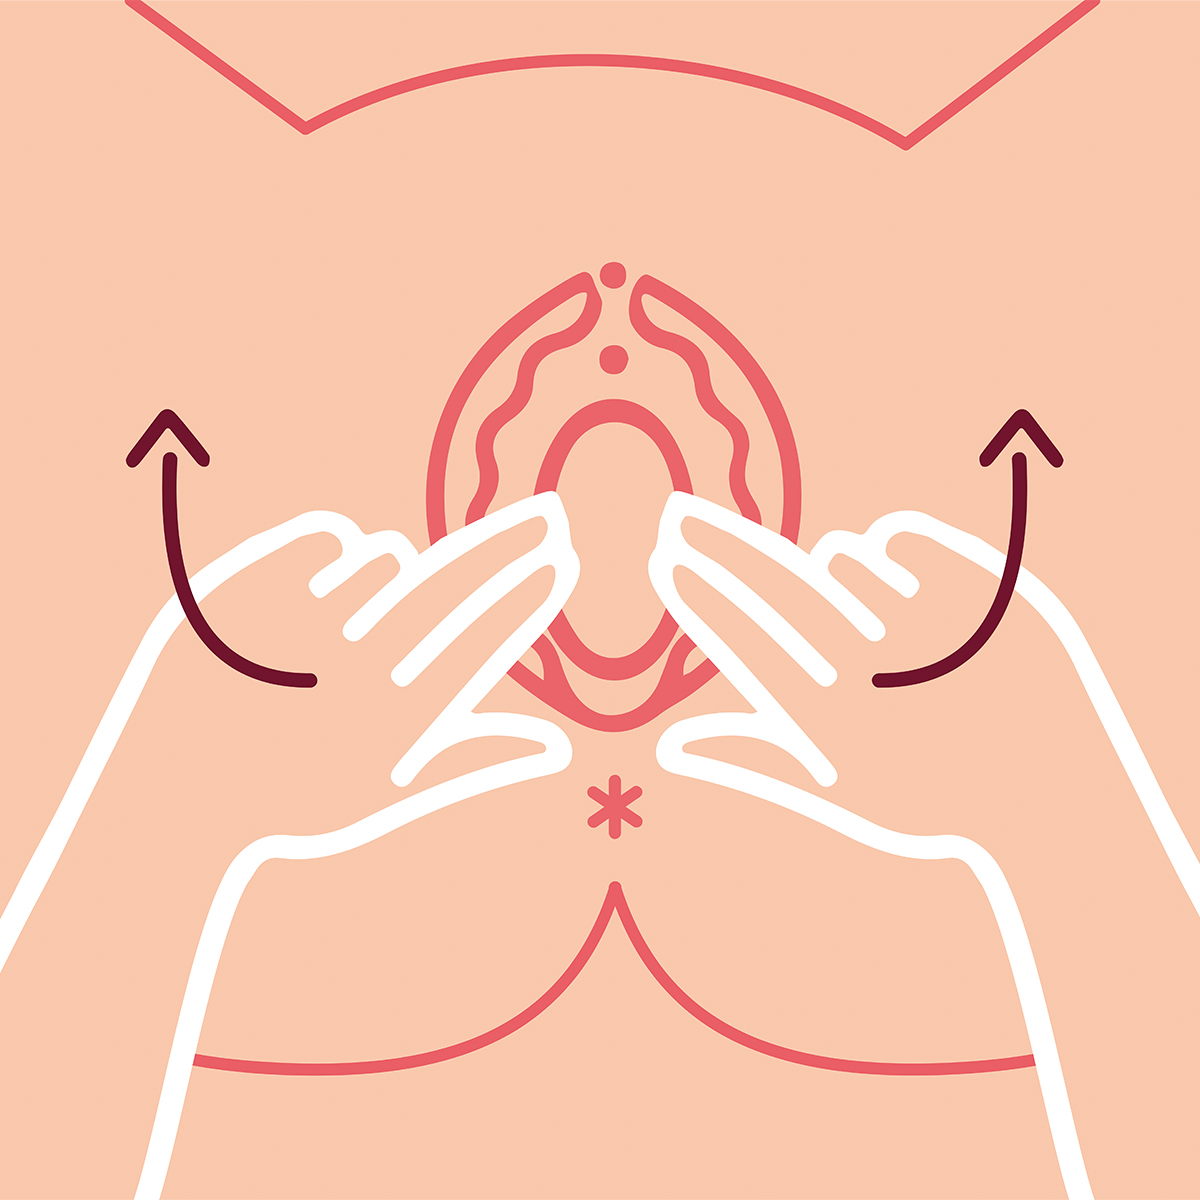 vaginal massage by midwife Xxx Pics Hd